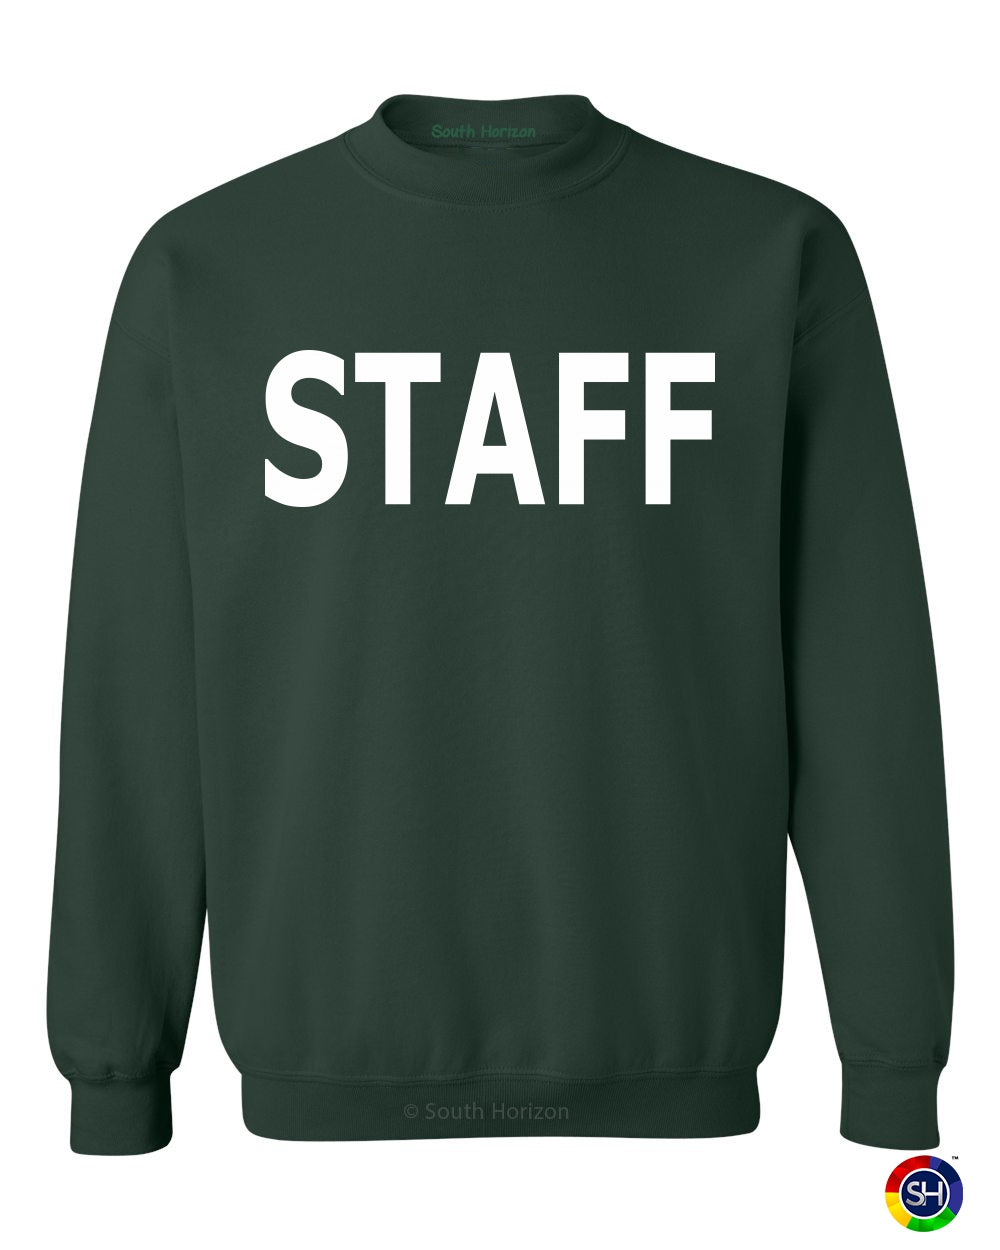 STAFF on SweatShirt (#923-11)